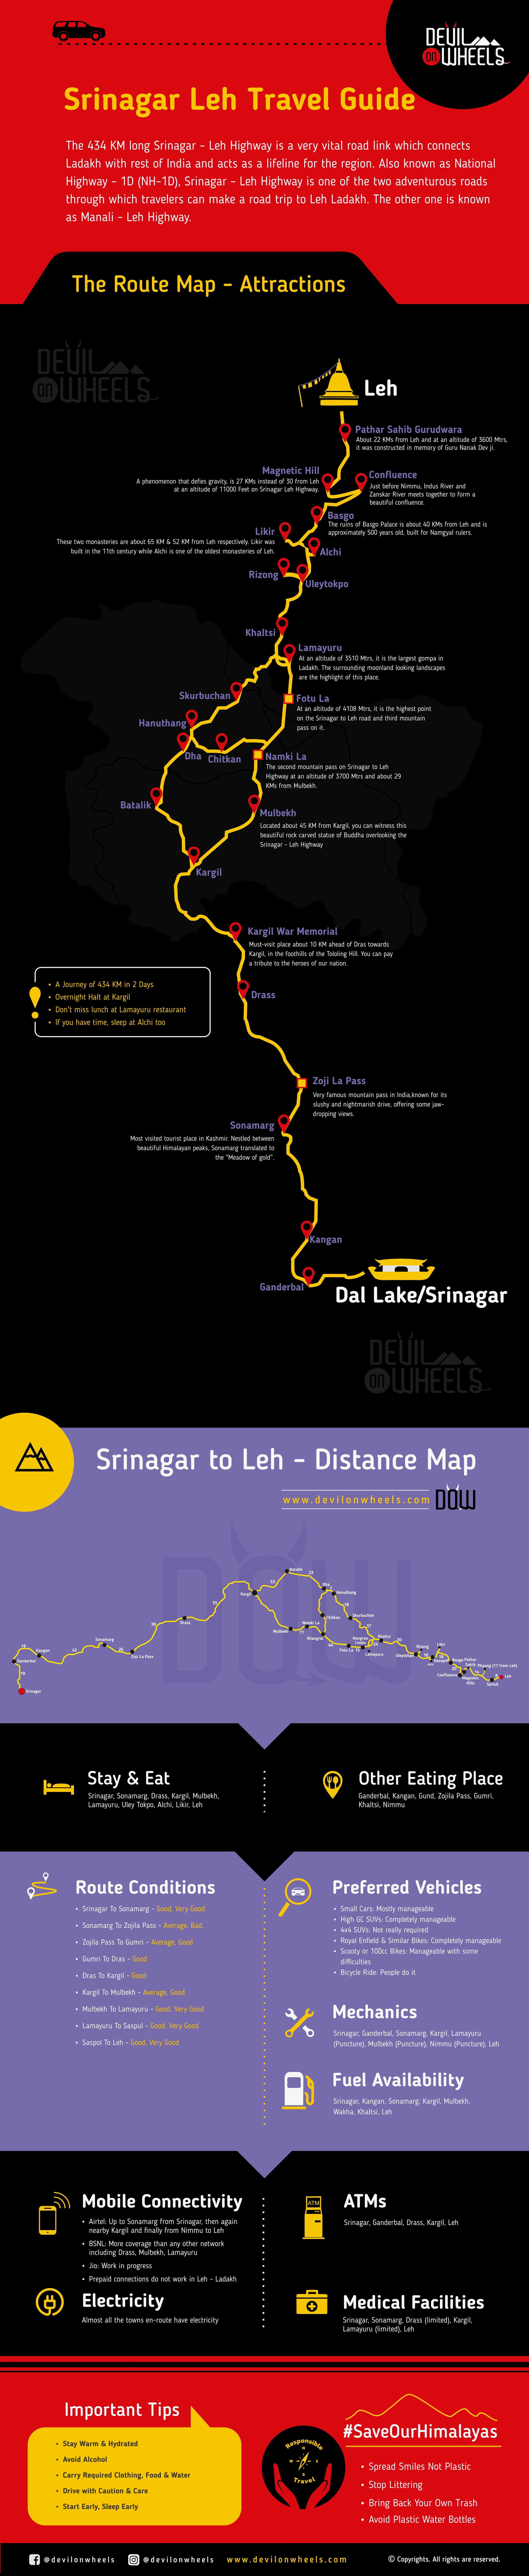 Srinagar Leh Highway Travel Guide Infographic